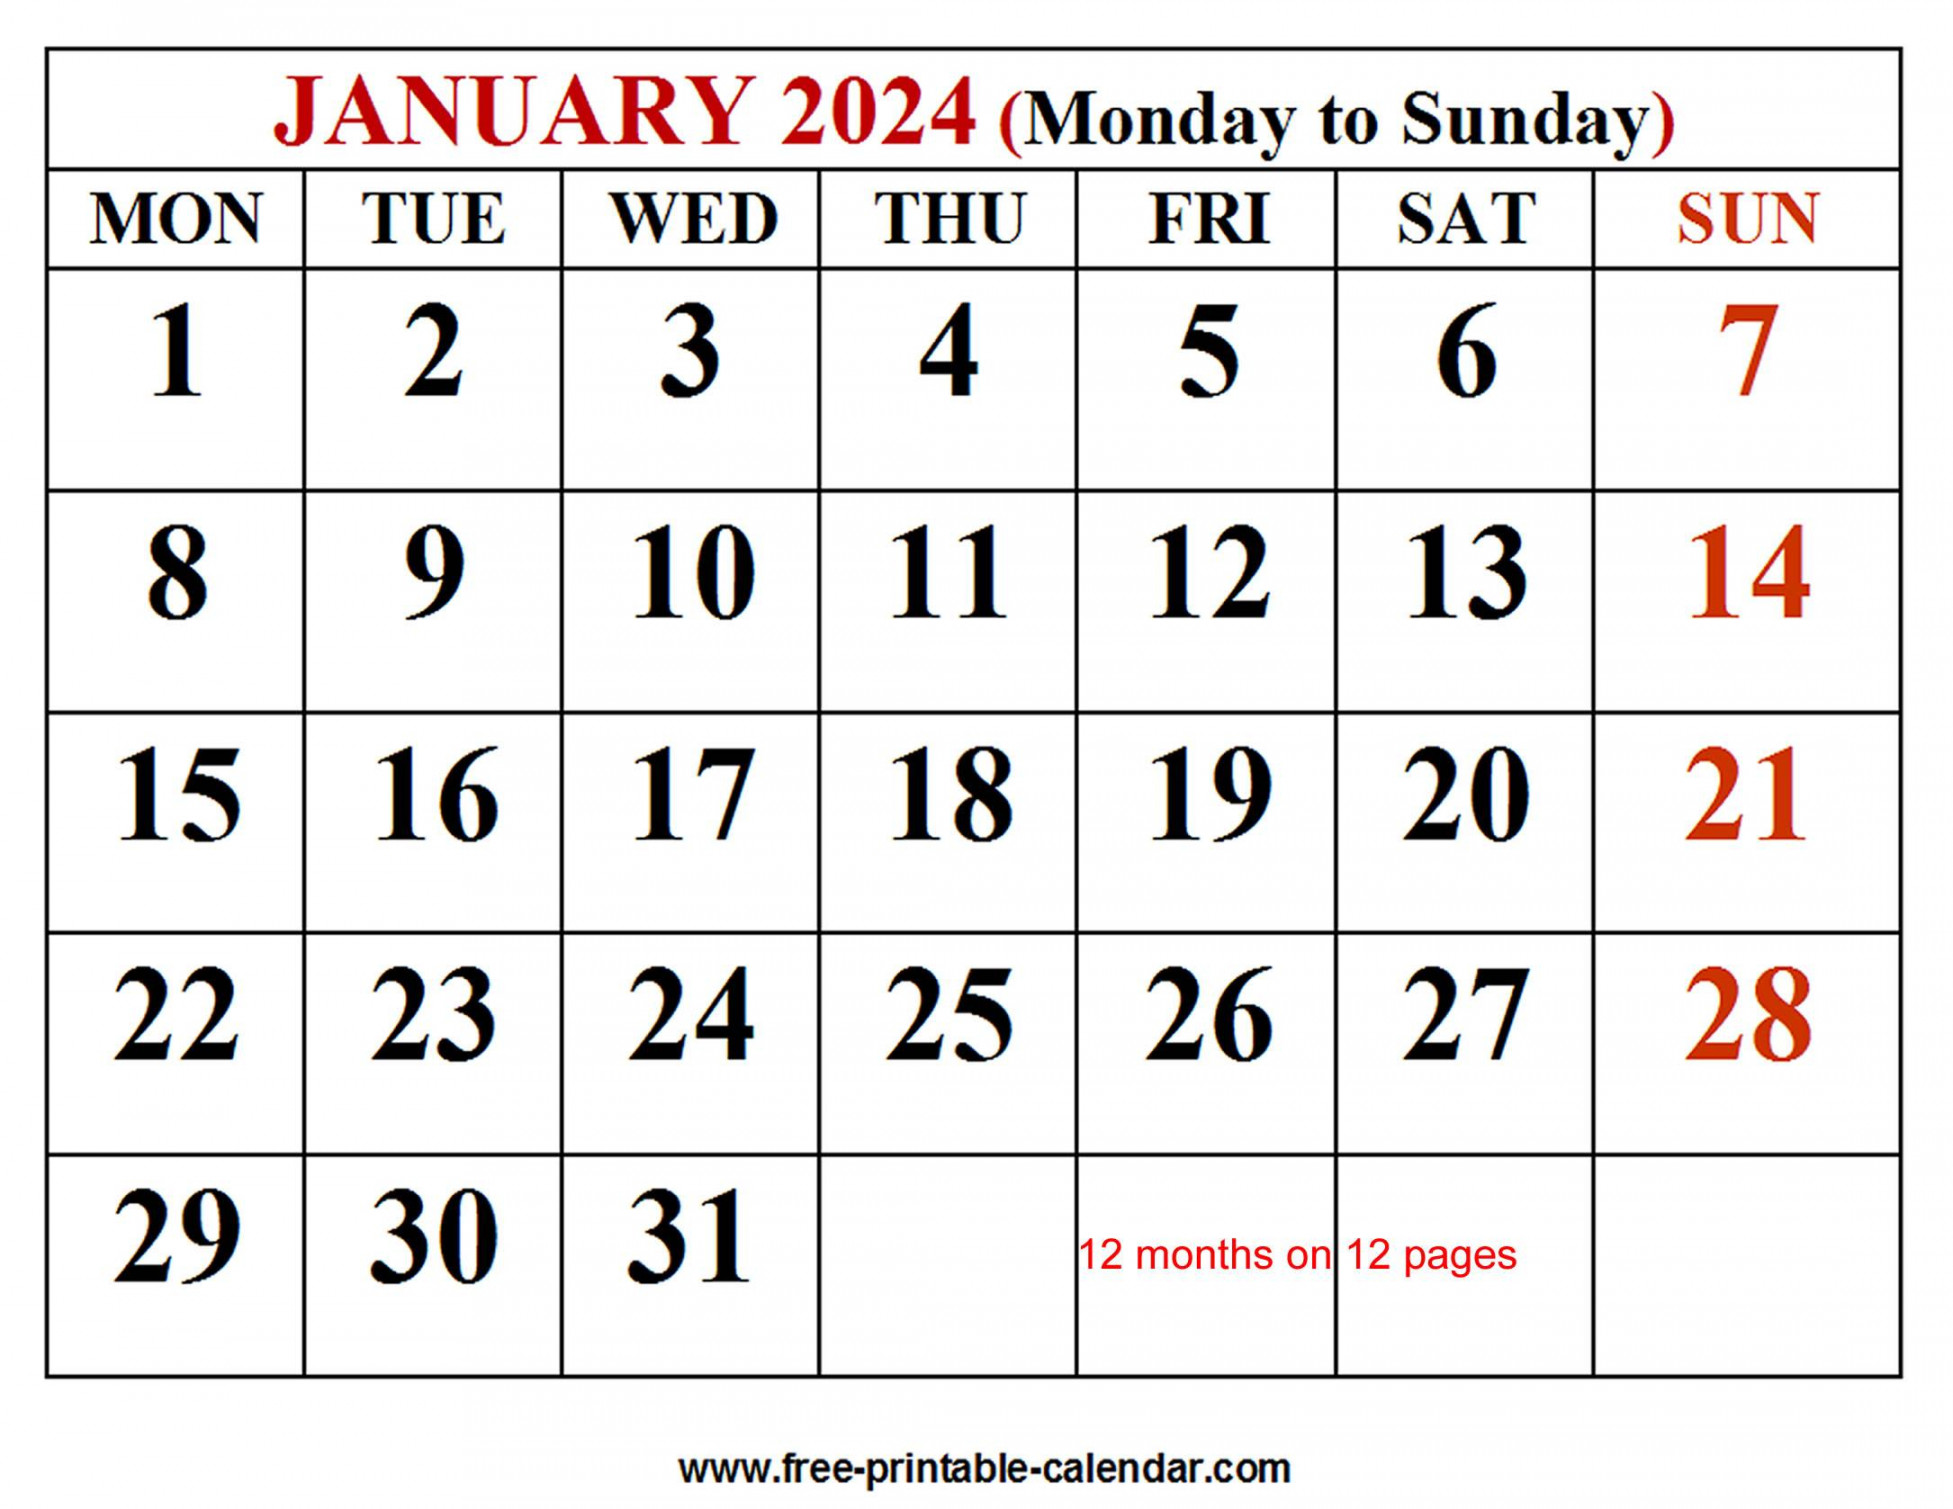 Calendar Template - Free-printable-calendar